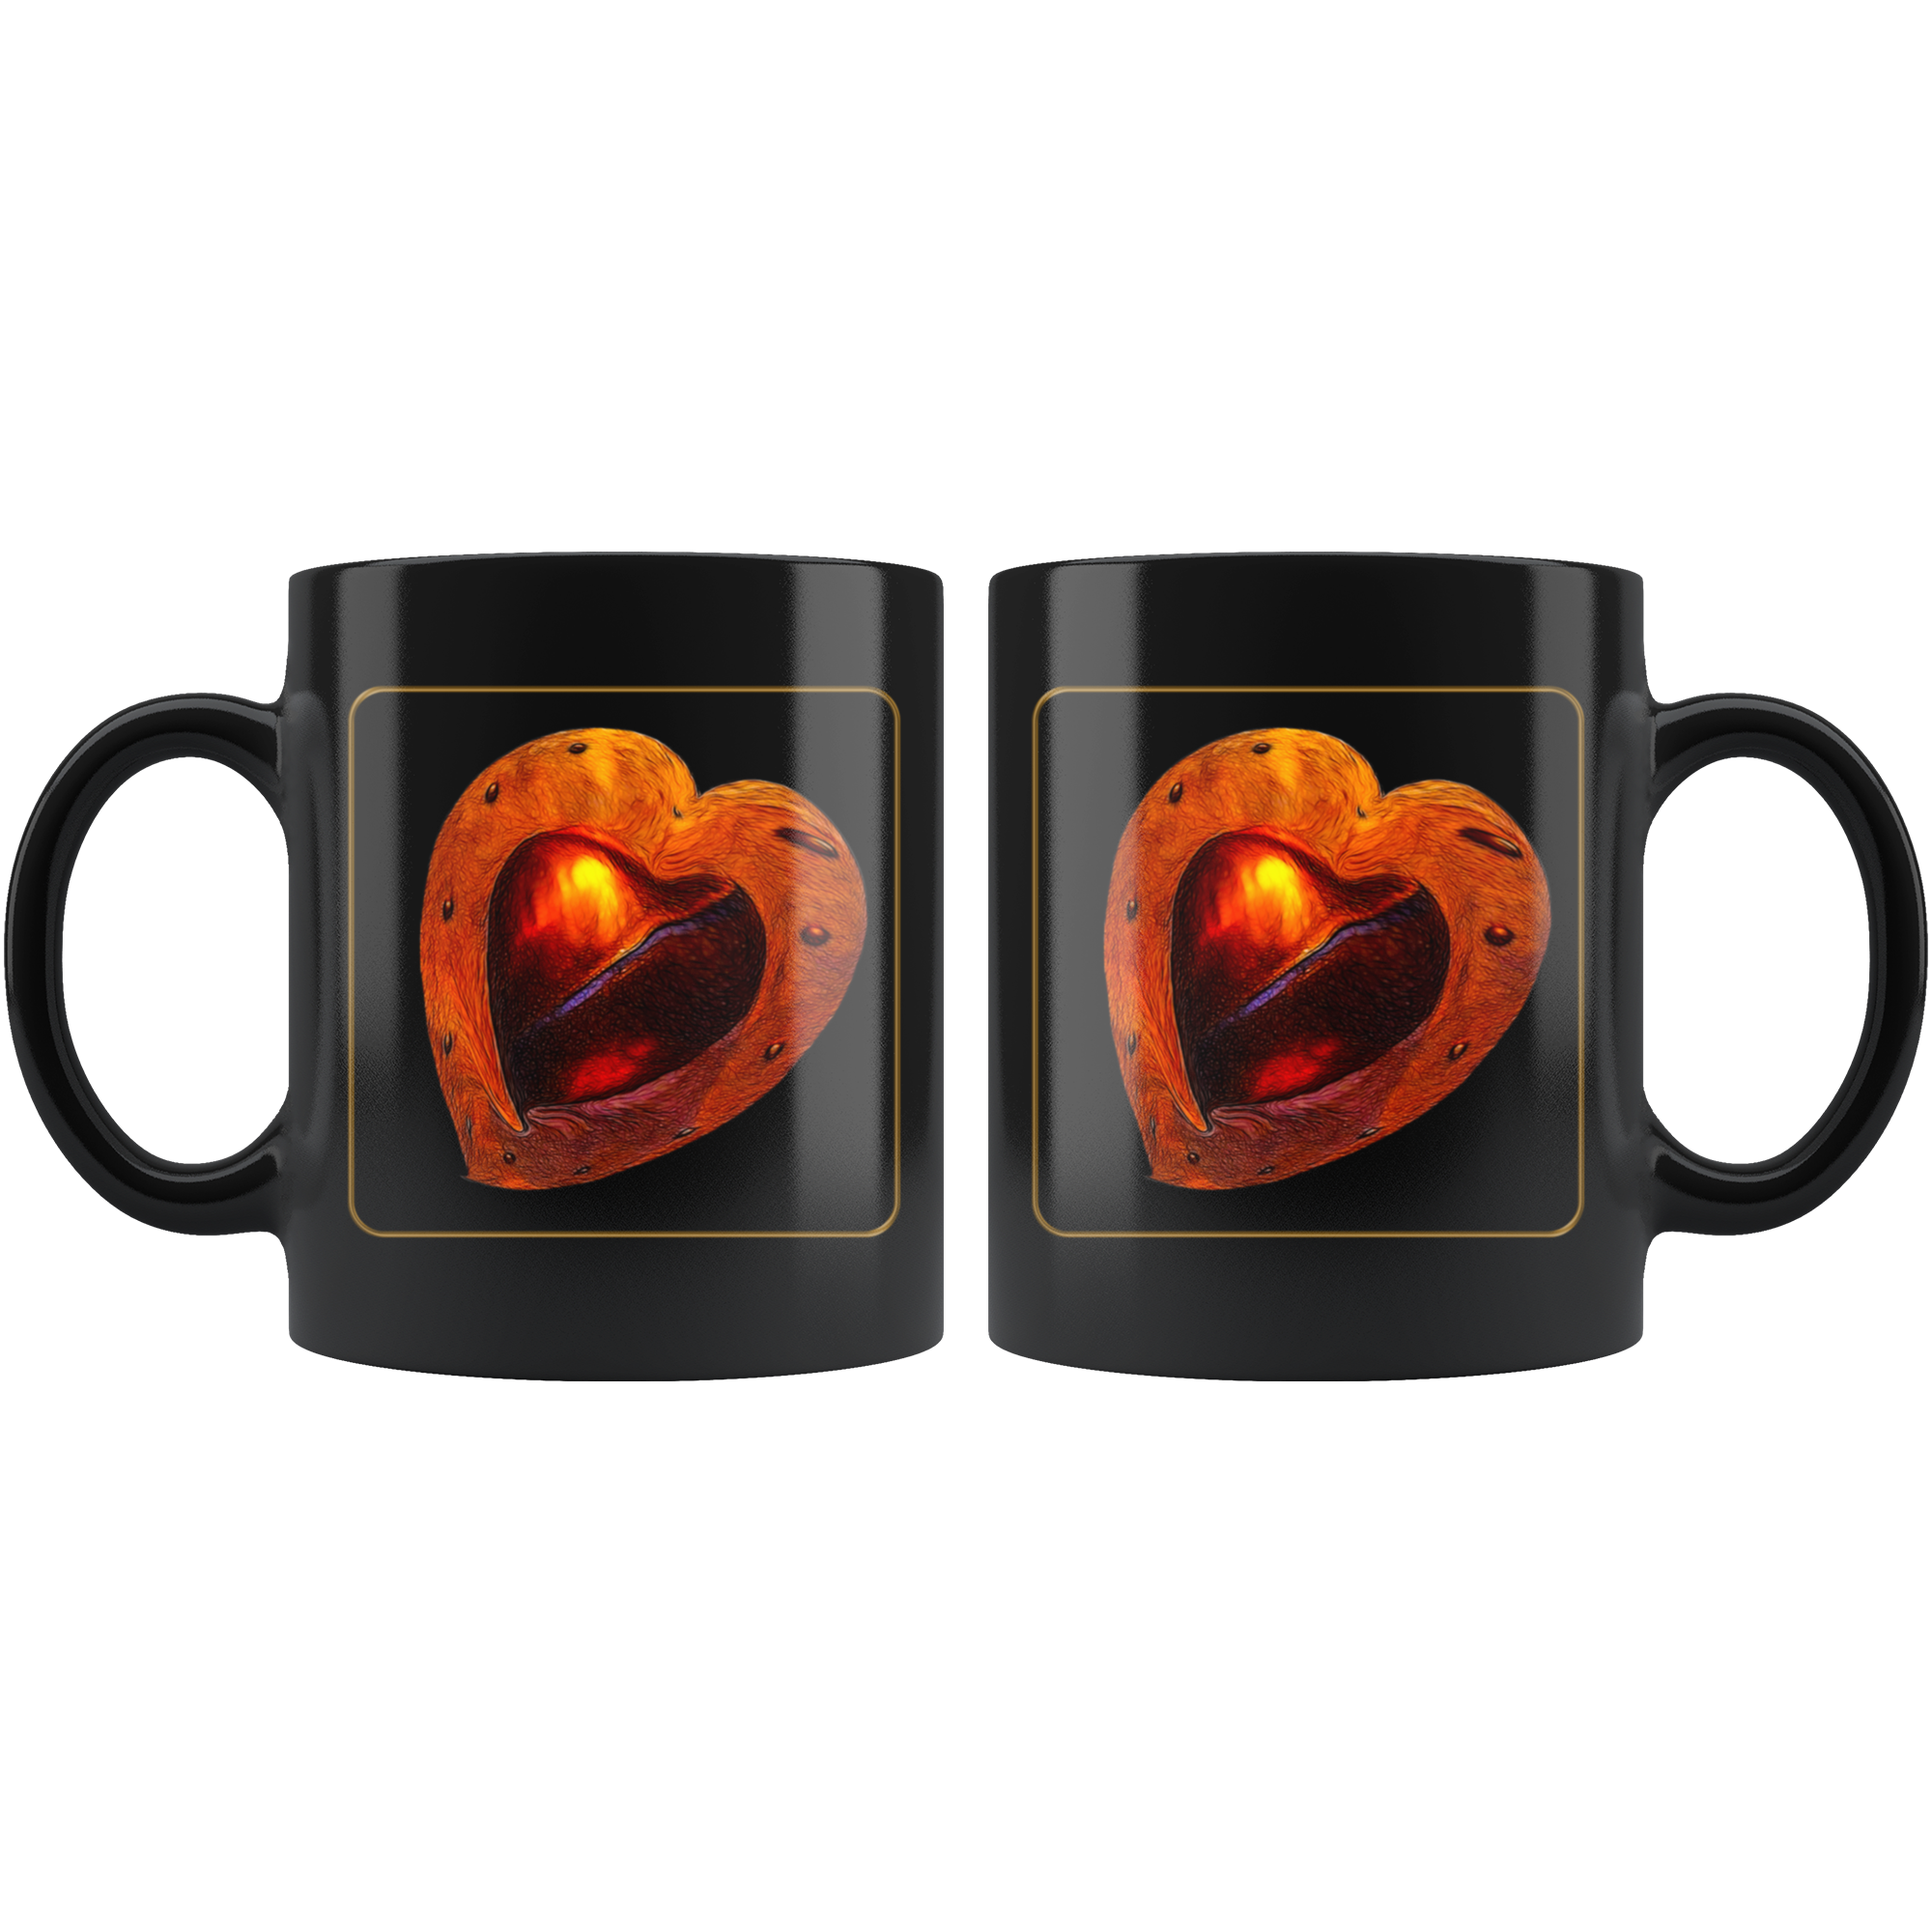 My Heart - 11 oz black mug